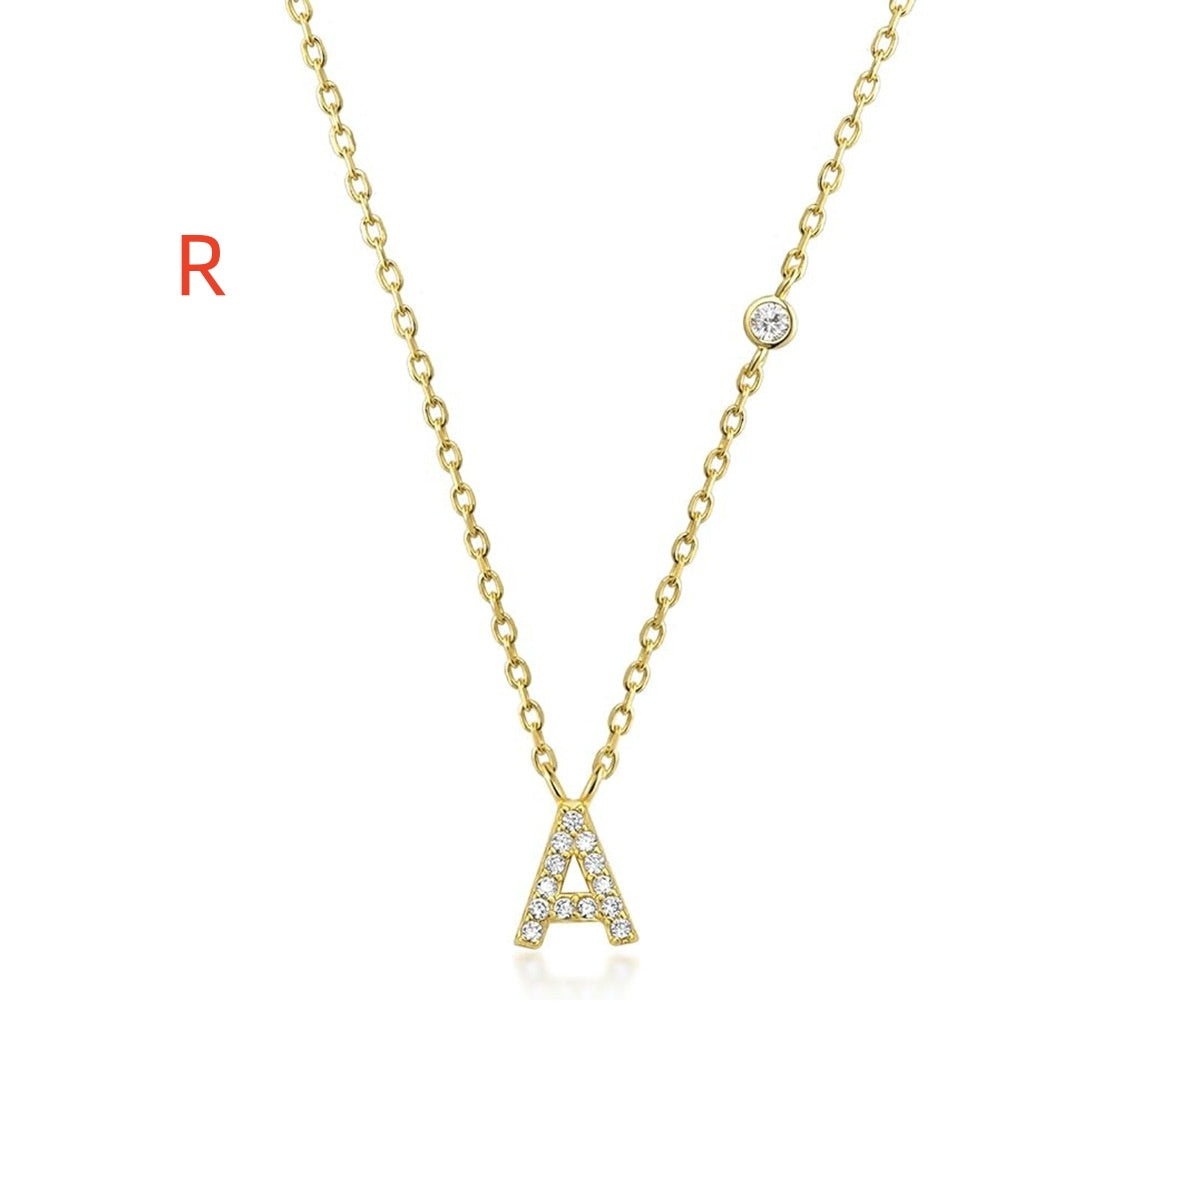 Fashion Jewelry Luxury Gold Color A-Z 26 Letters Necklace CZ Pendant